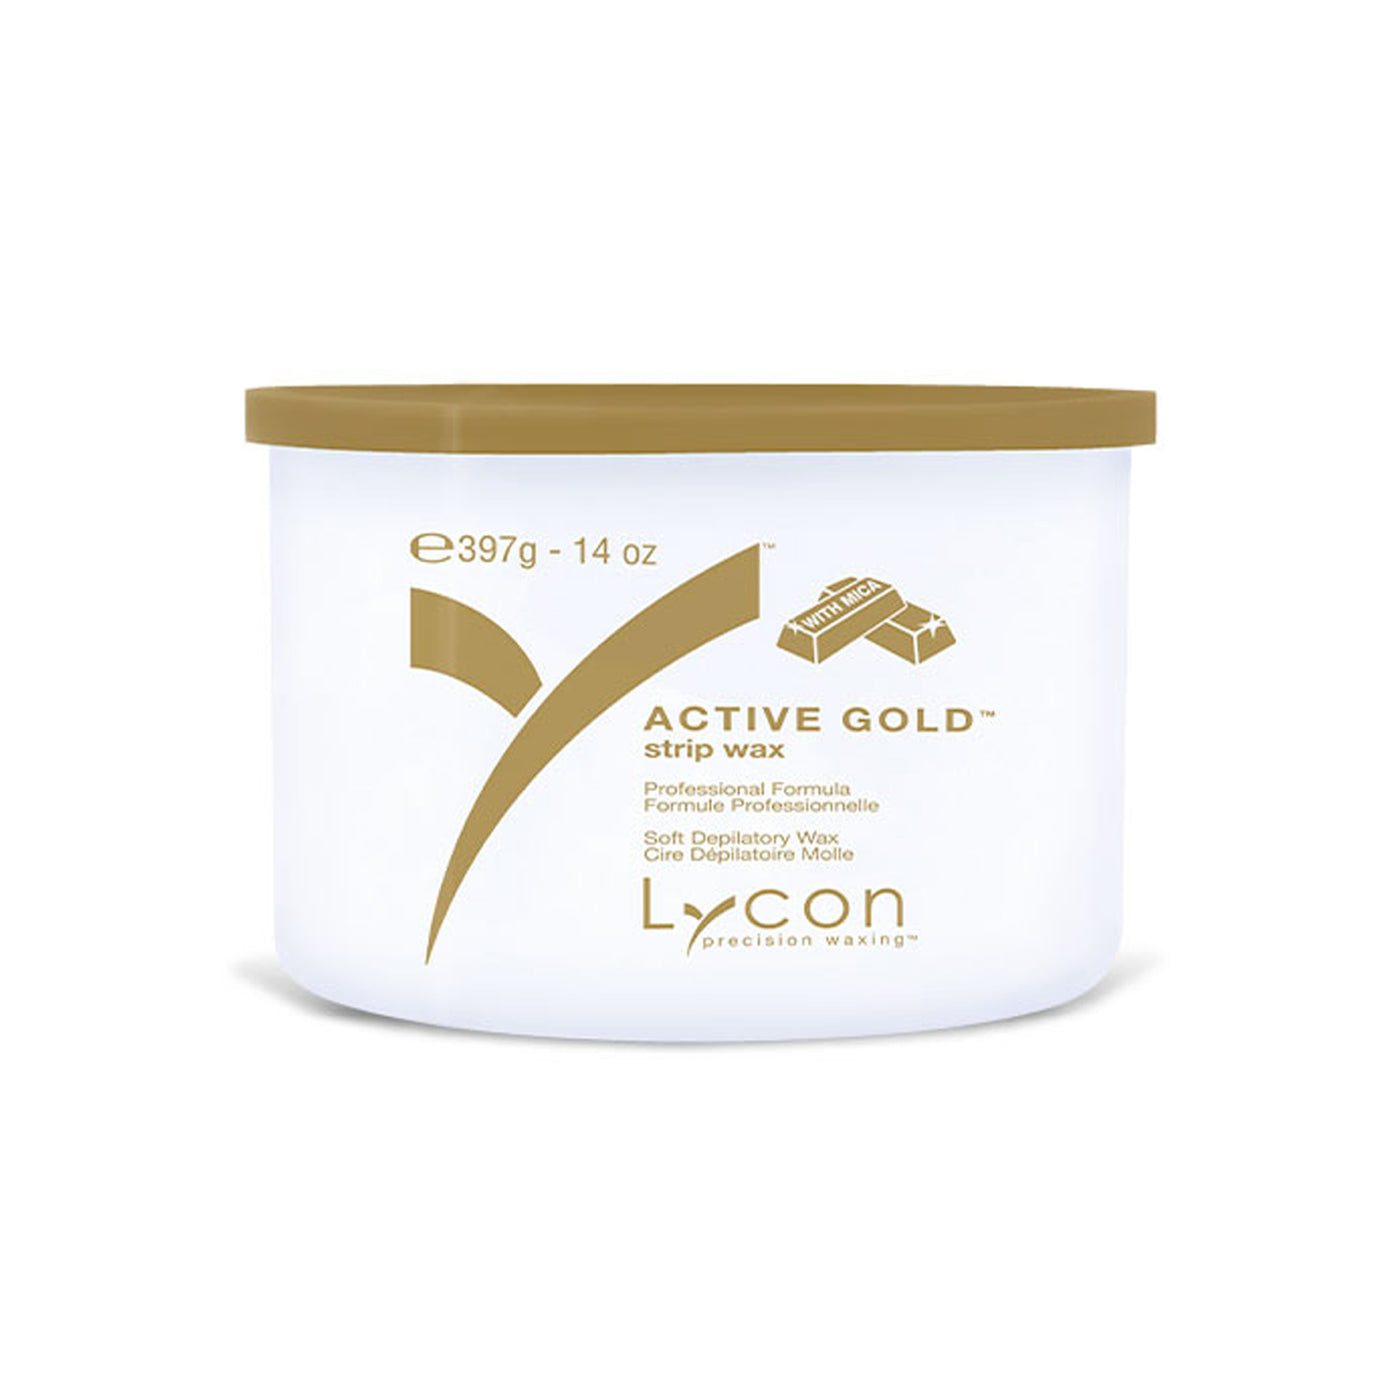 Lycon Active Gold Strip Wax 397g